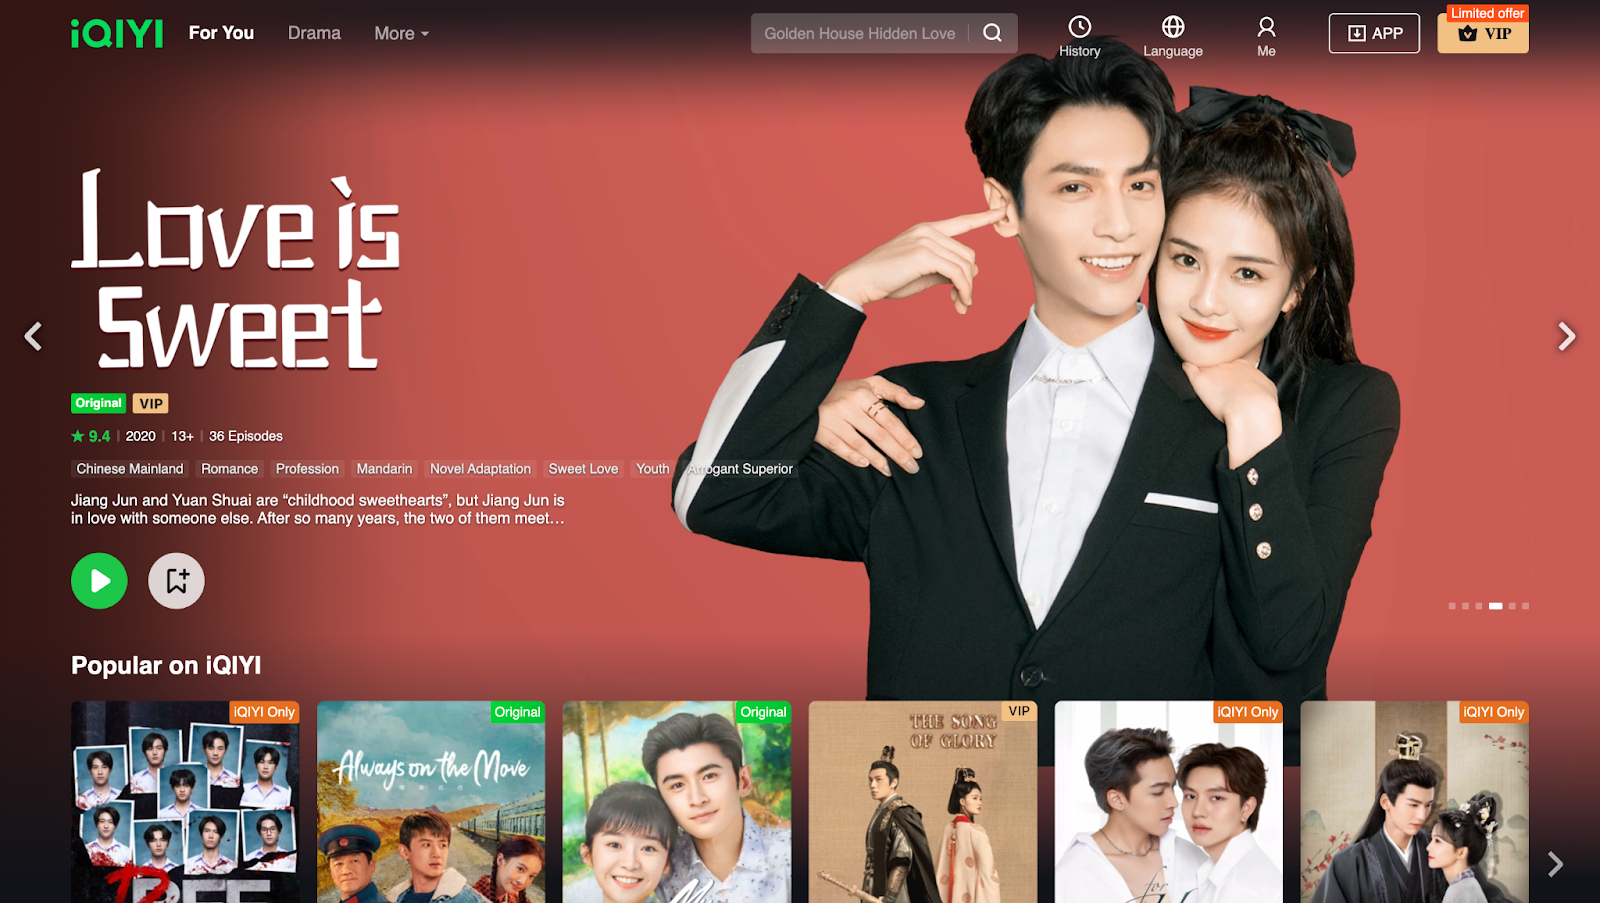 iQIYI homepage featuring Love is Sweet
